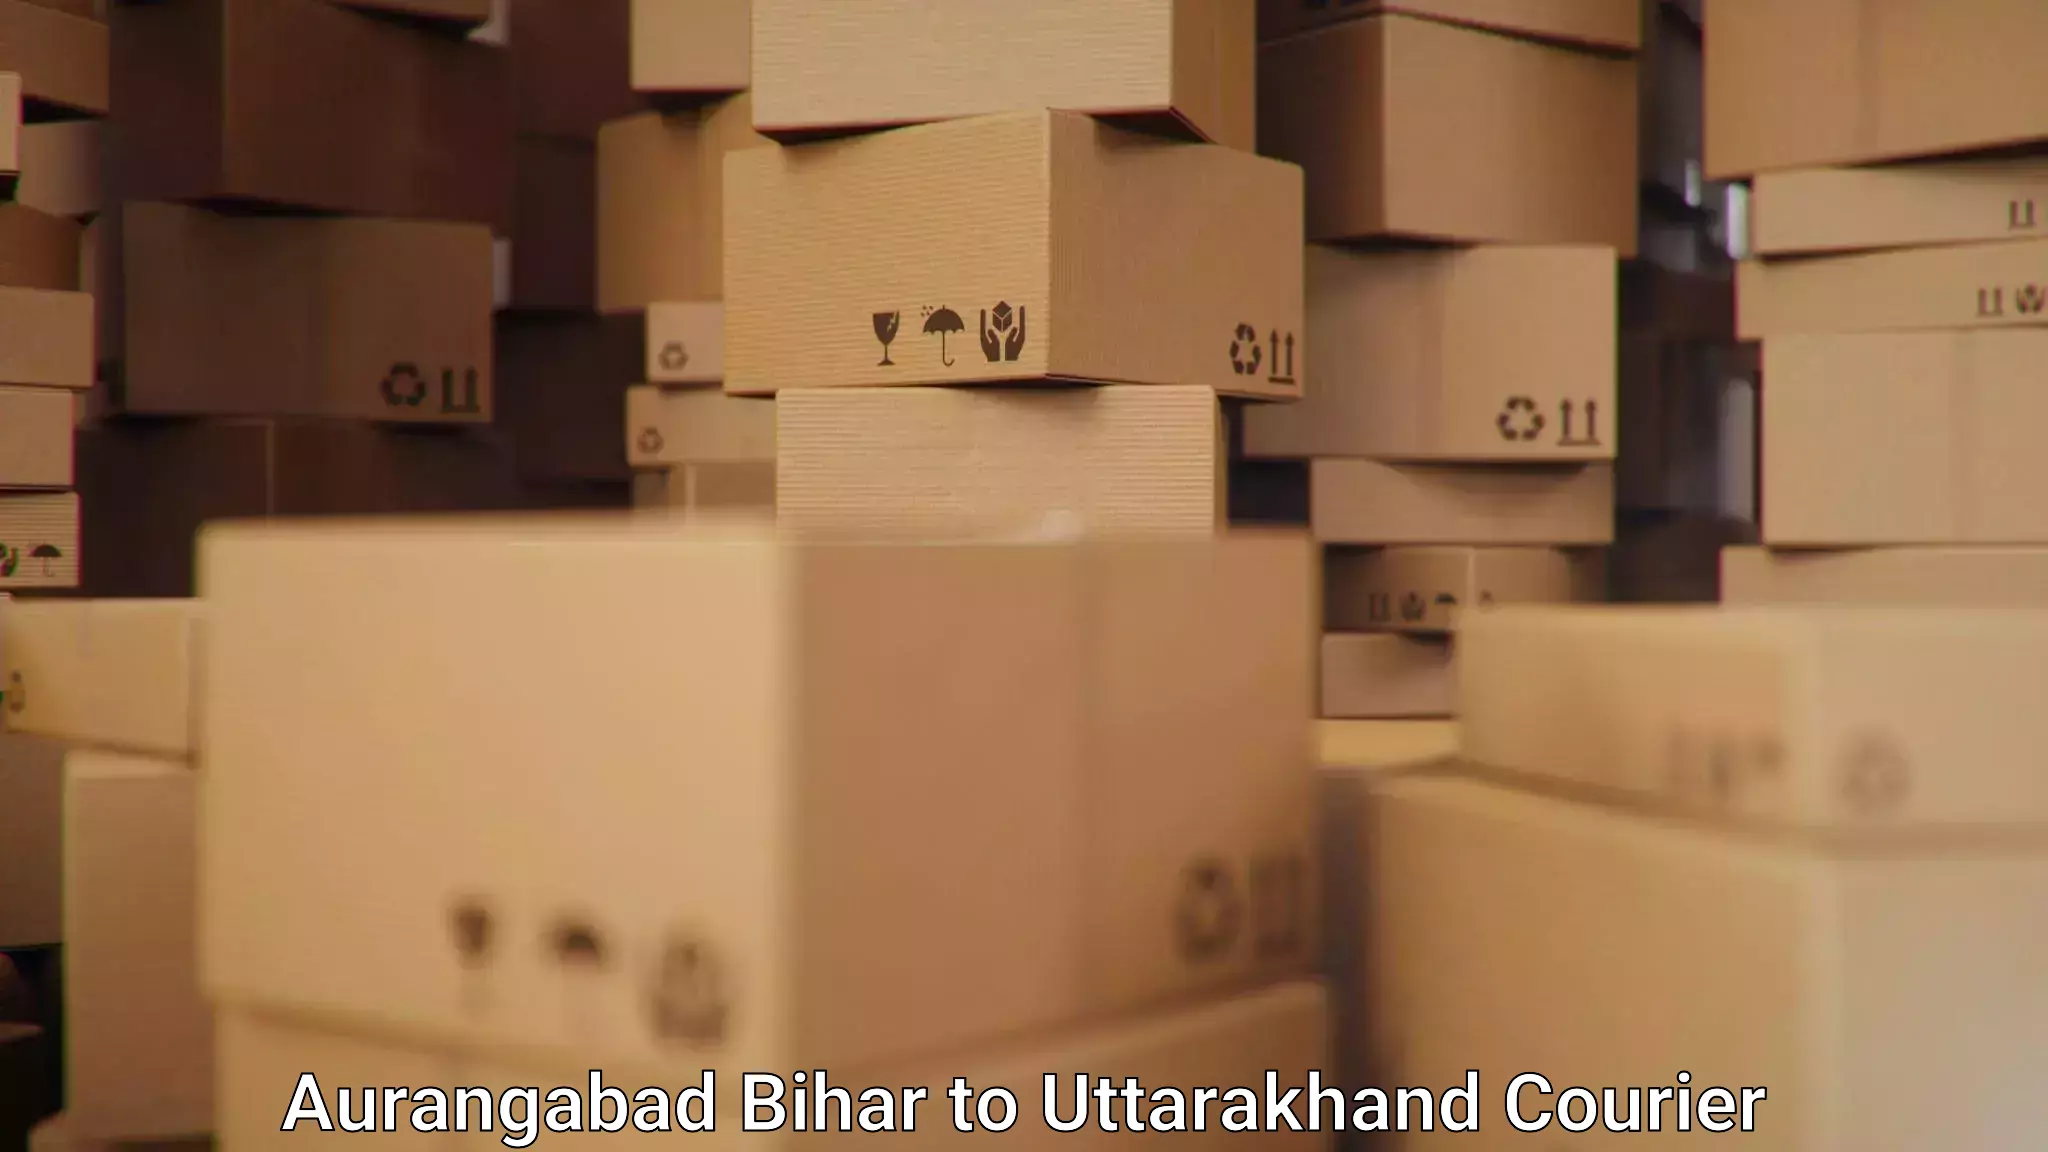 Residential courier service Aurangabad Bihar to Dehradun